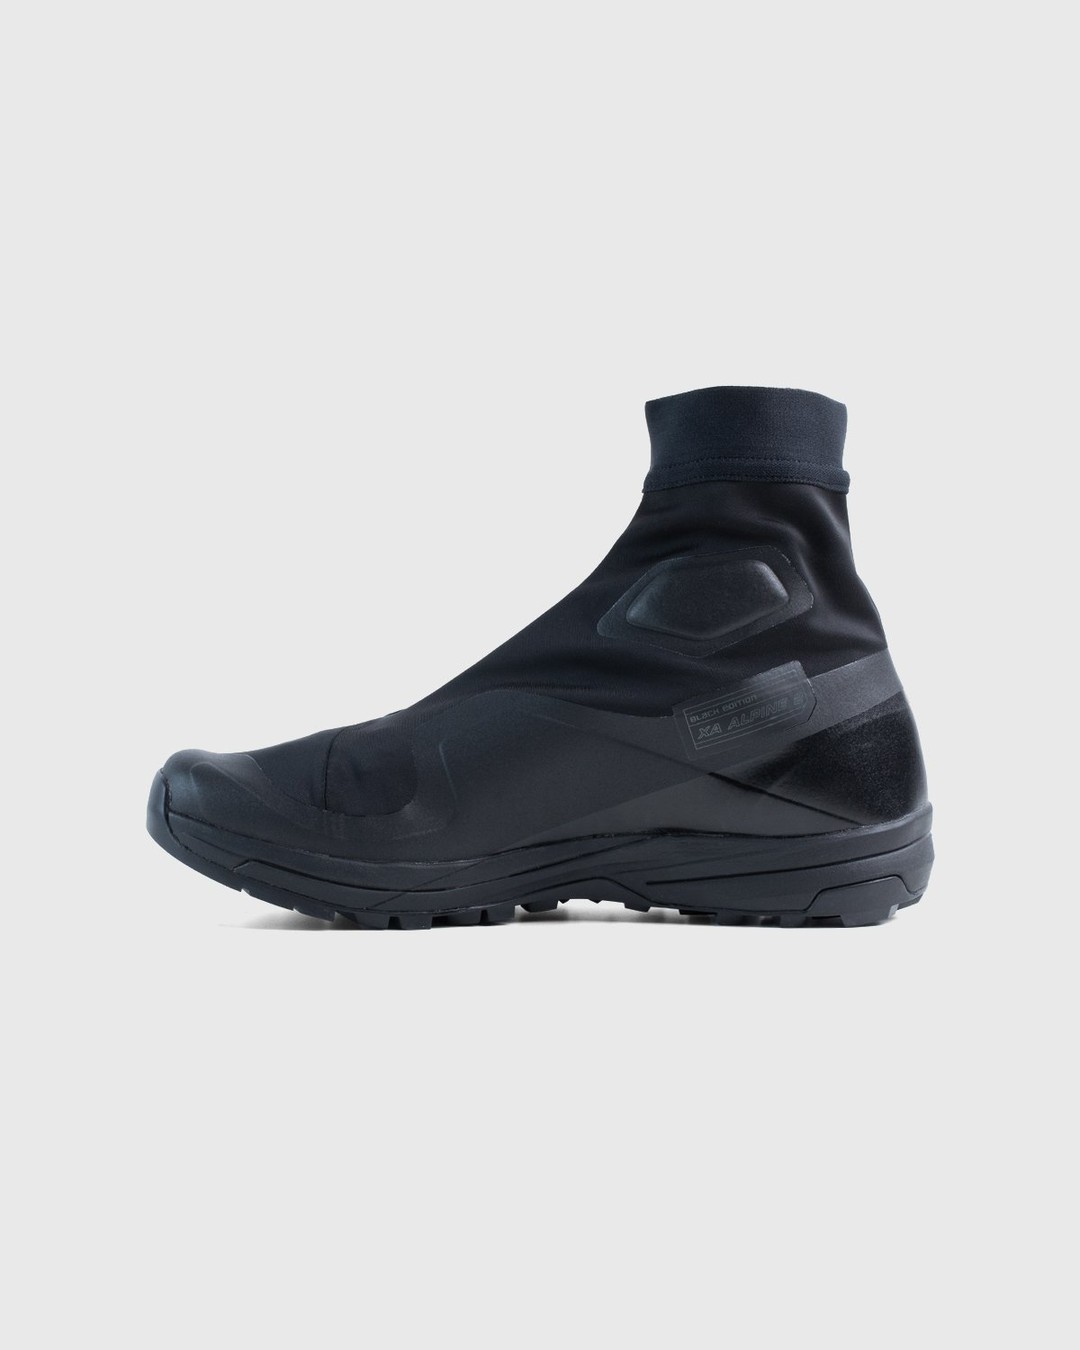 Salomon – S/Lab XA-Alpine 2 Limited Edition Black - Hiking Boots - Black - Image 6